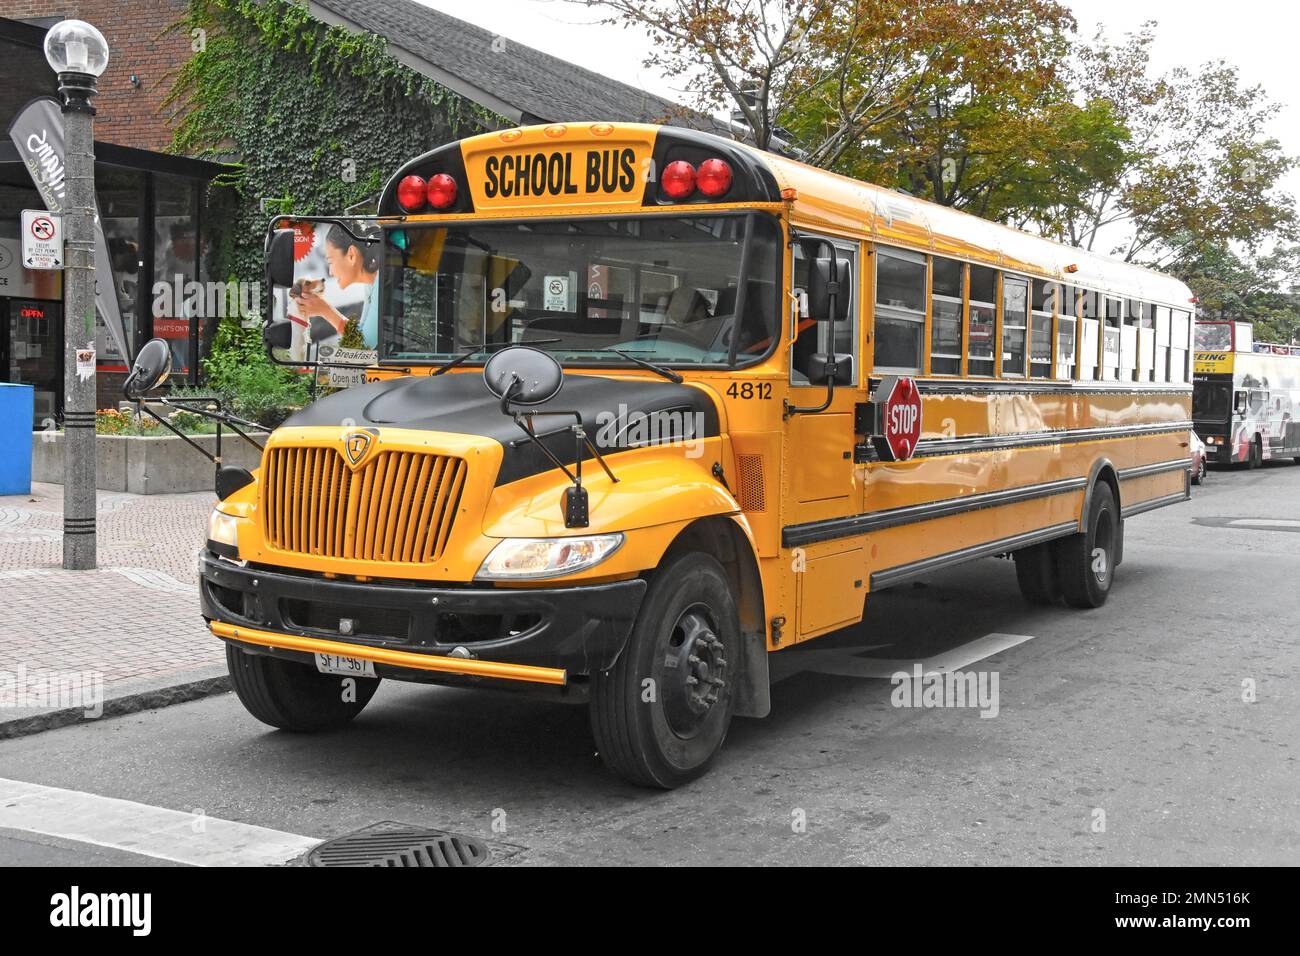 School bus in North America Stock Photo